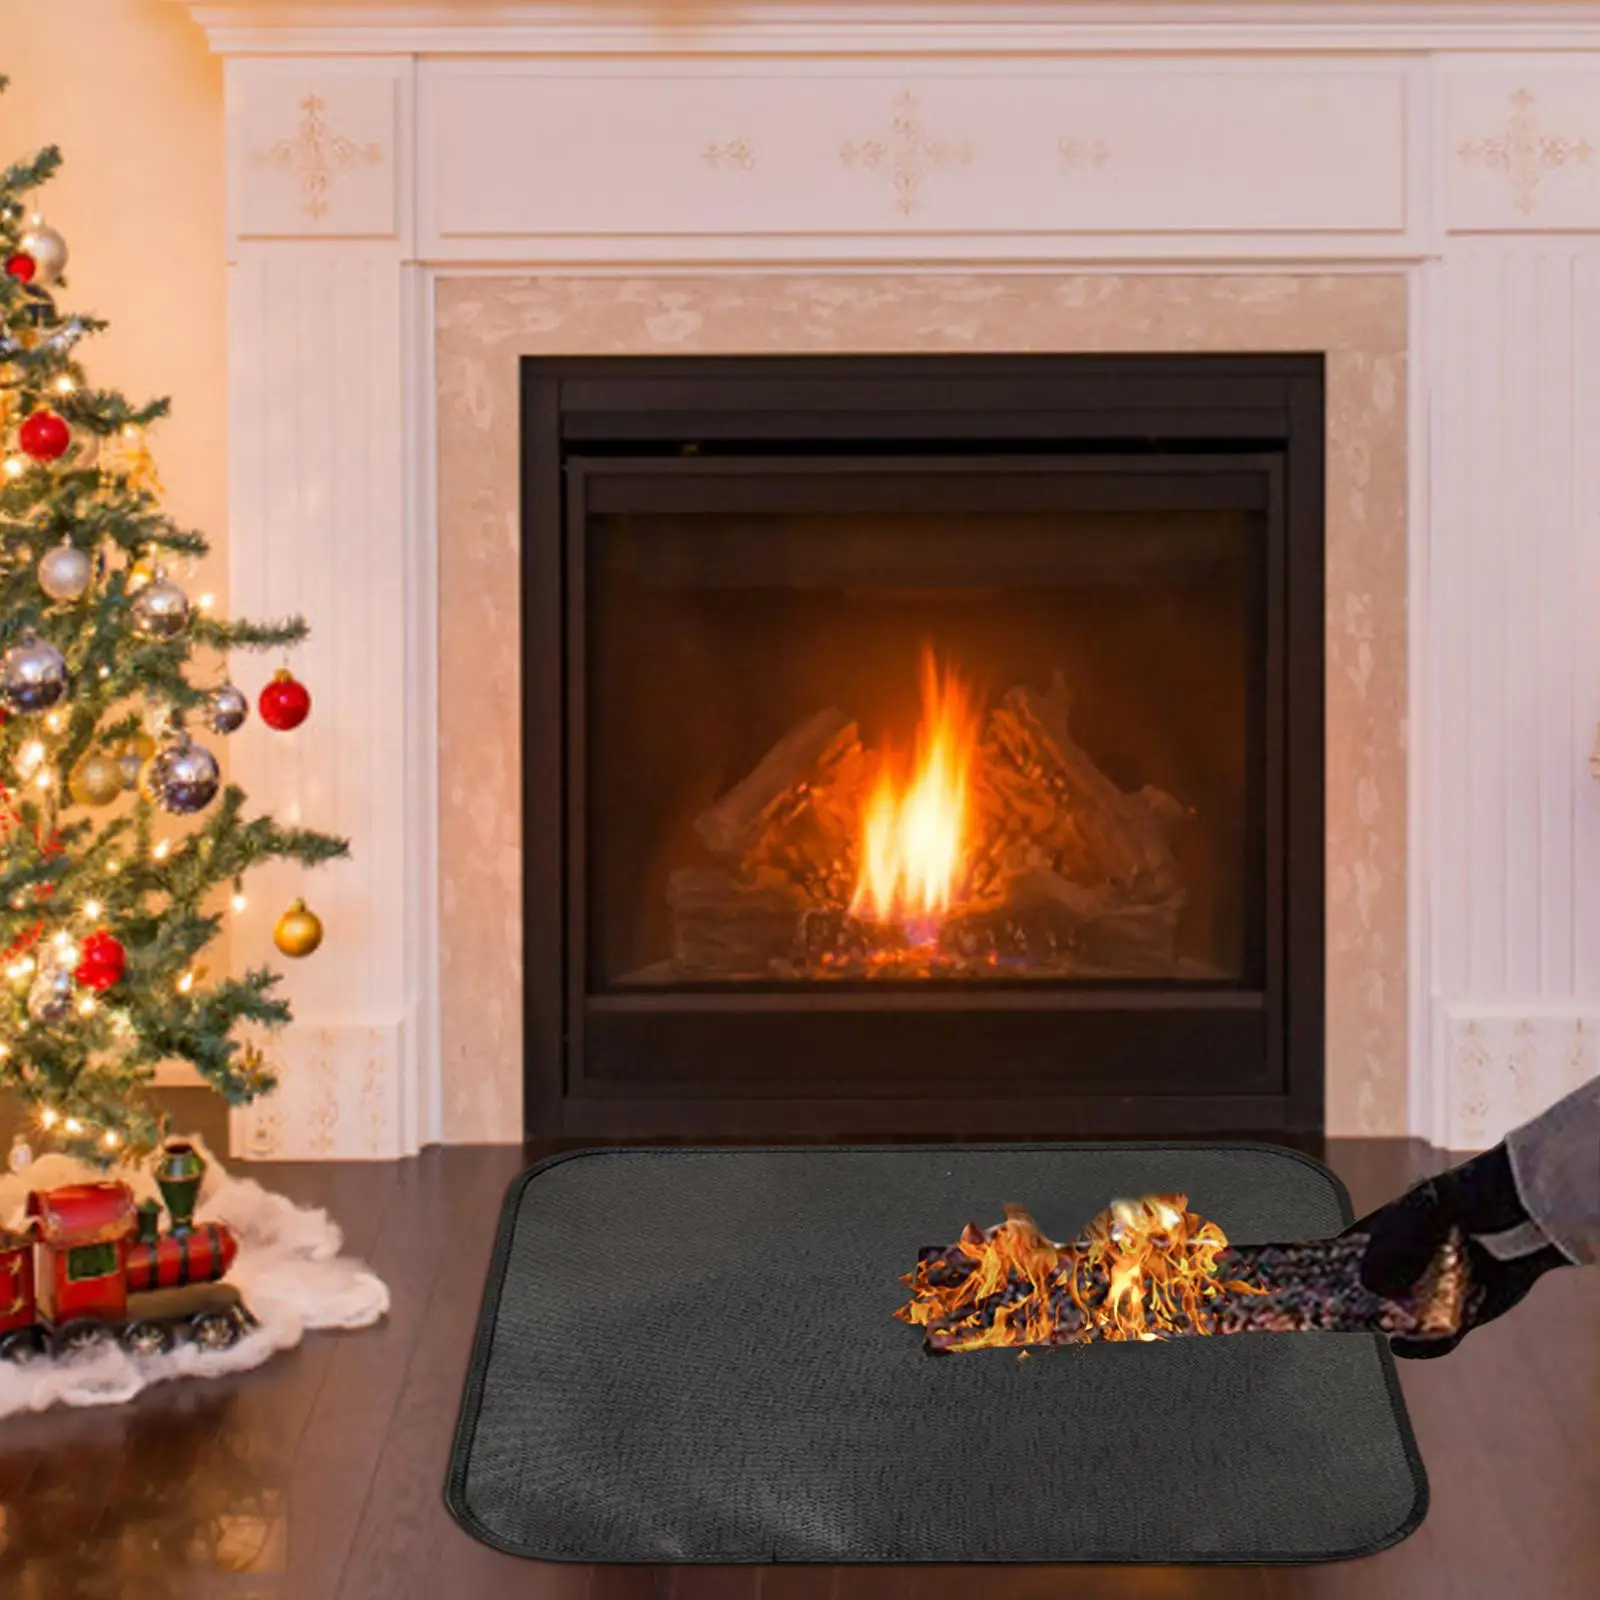 Heat Insulation Fireplace Mat Rectangular Waterproof Non Slip BBQ Protector Grilling Mat for Decking Backyard Indoor Grill